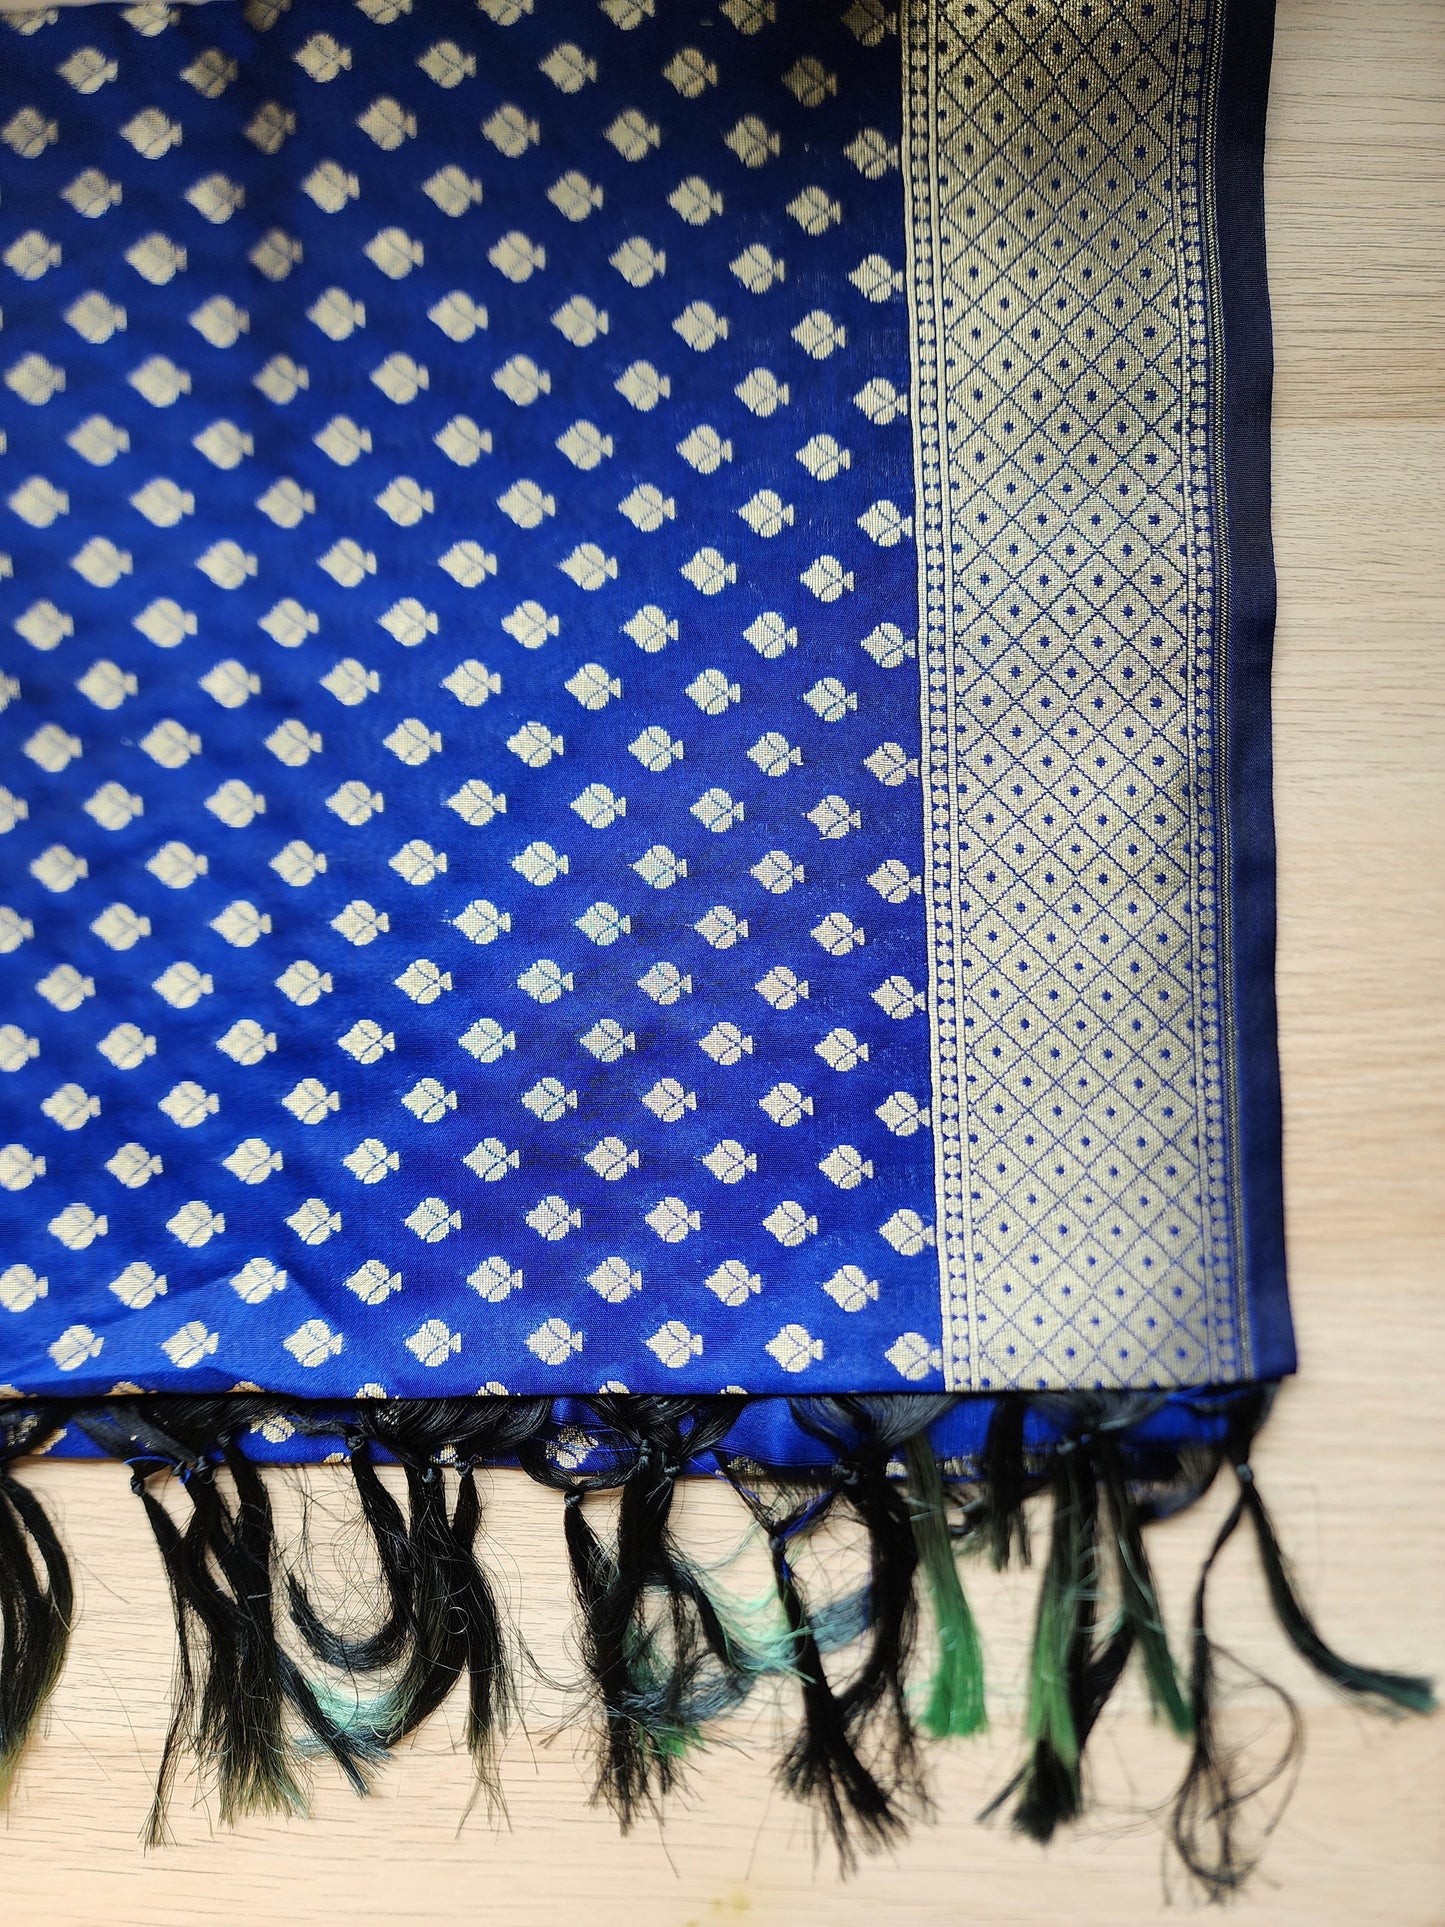 Banarasi Silk Royal Blue Dupatta with gold handweaving, Indian traditional and Festive designer dupatta, luxurious soft Banarsi dupatta